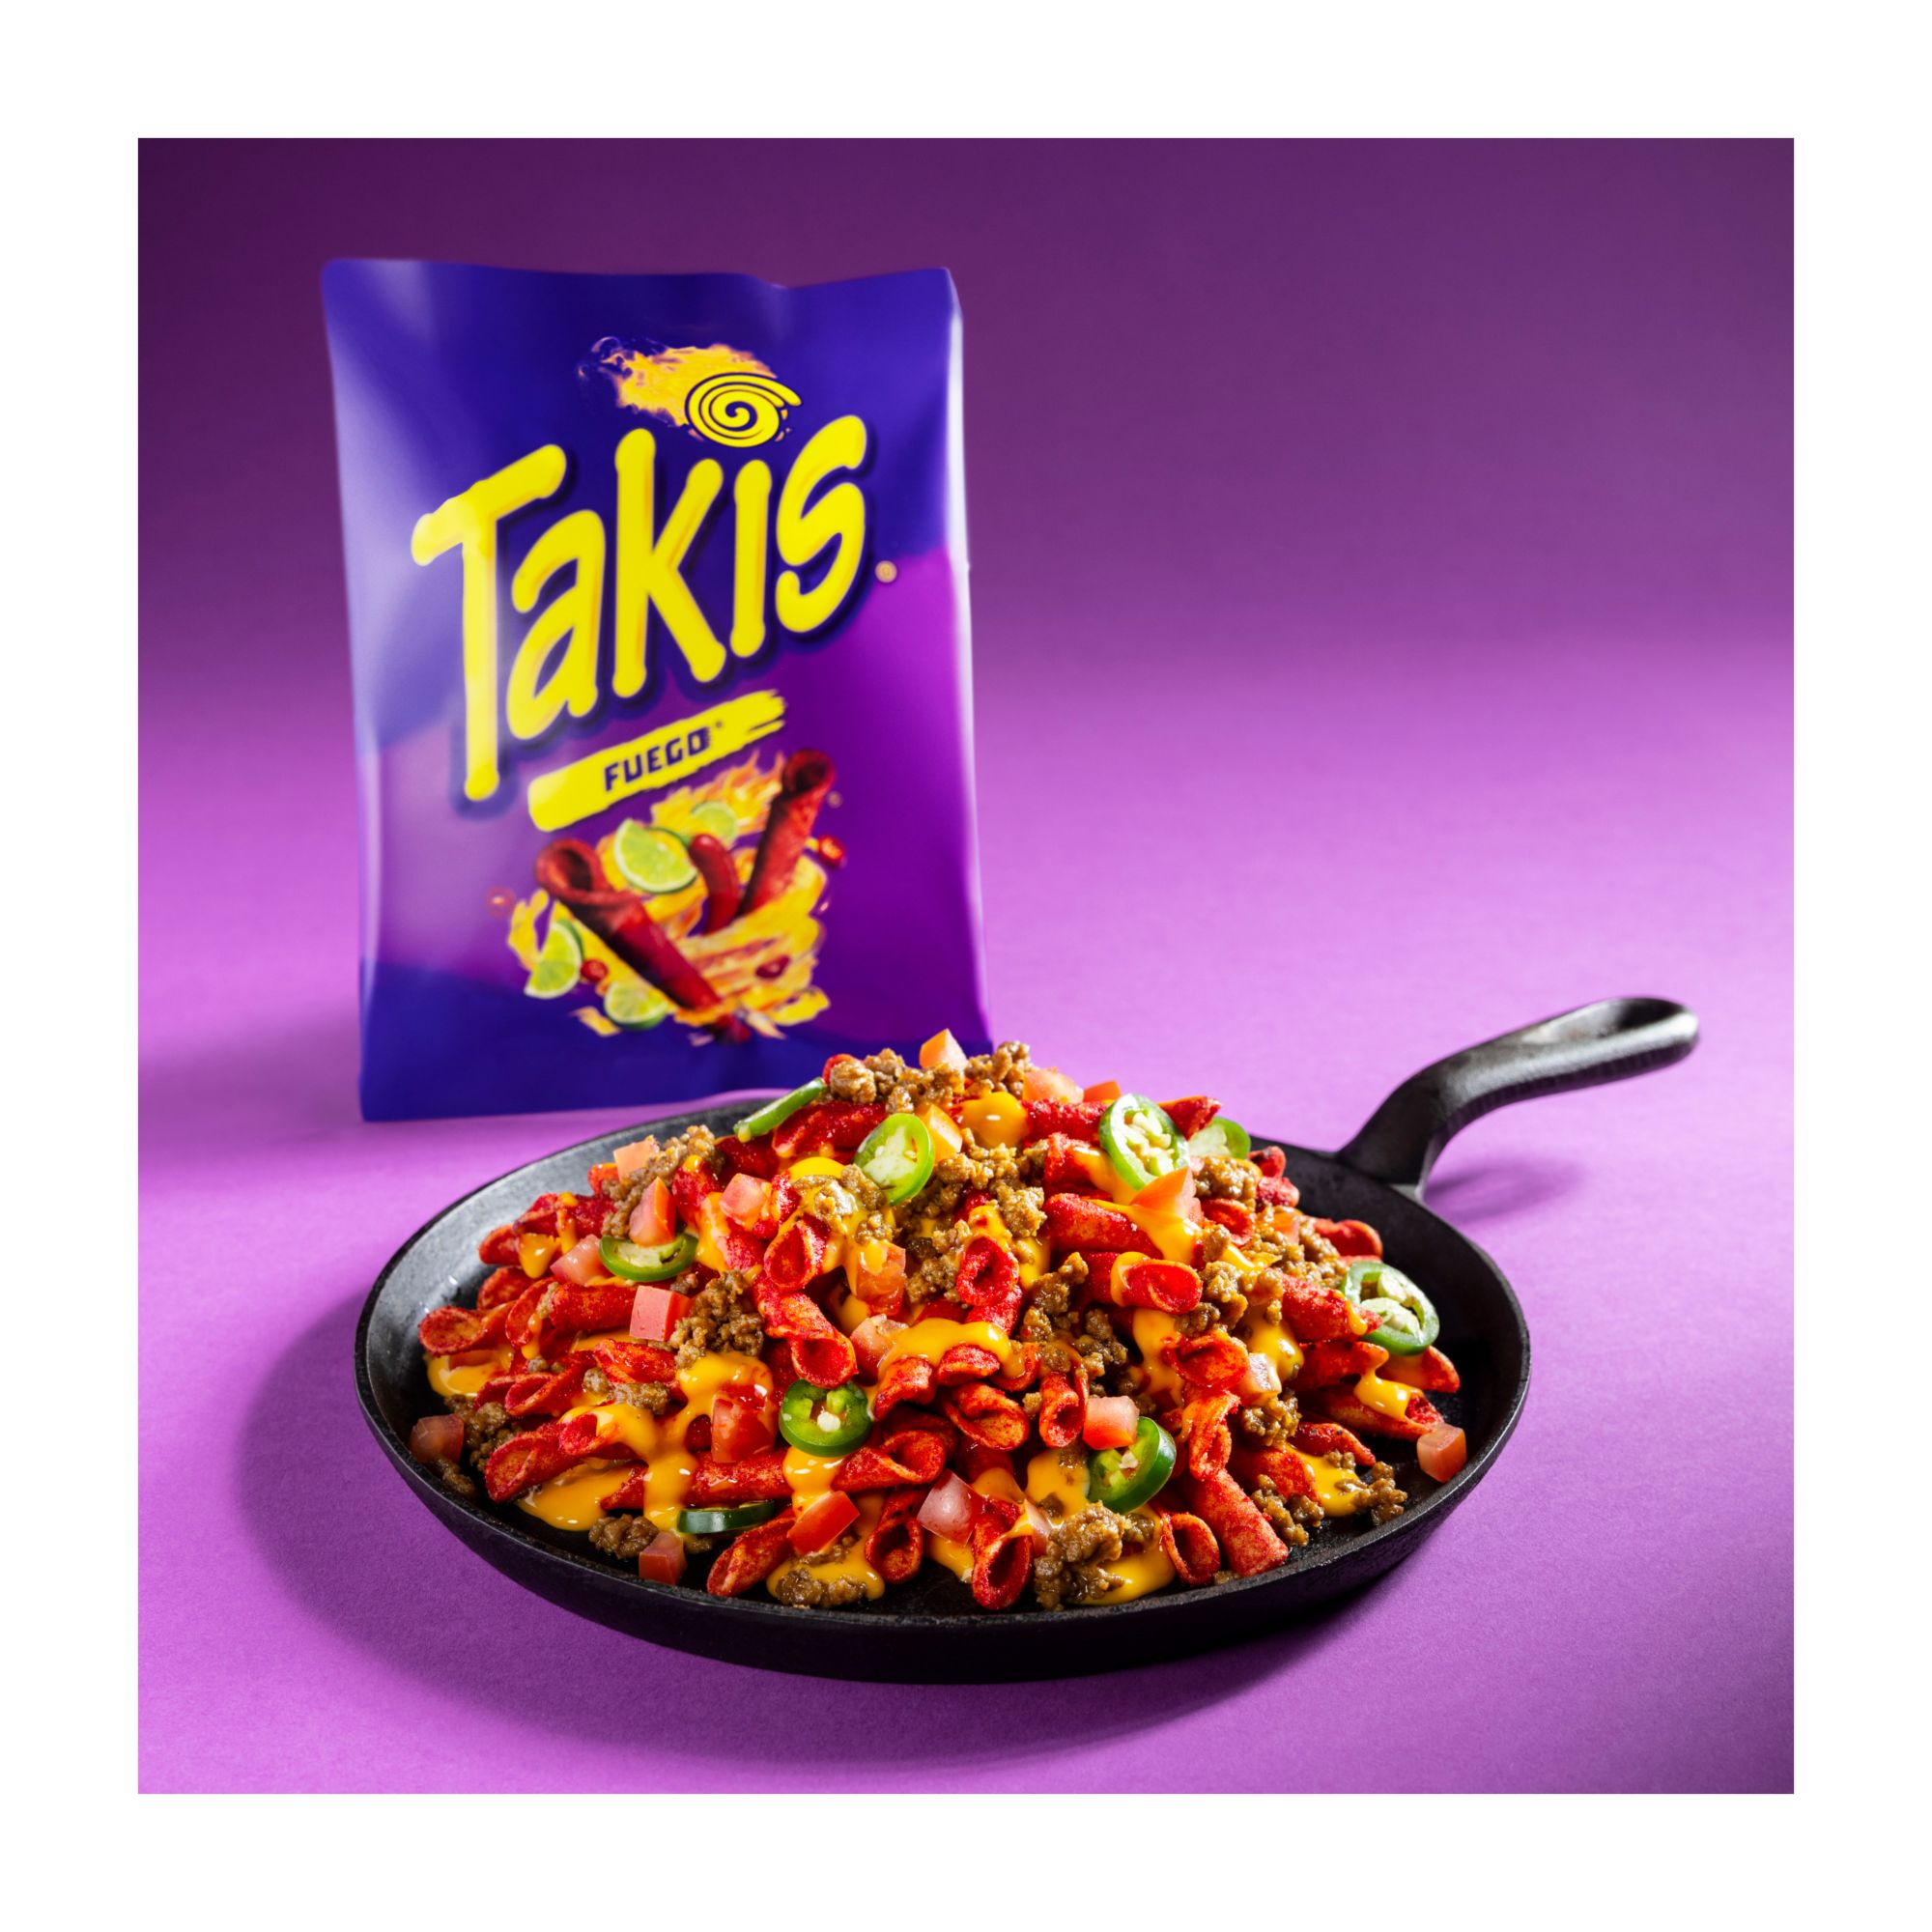 Takis Fuego Tortilla Chips, 1 oz, 46-count 